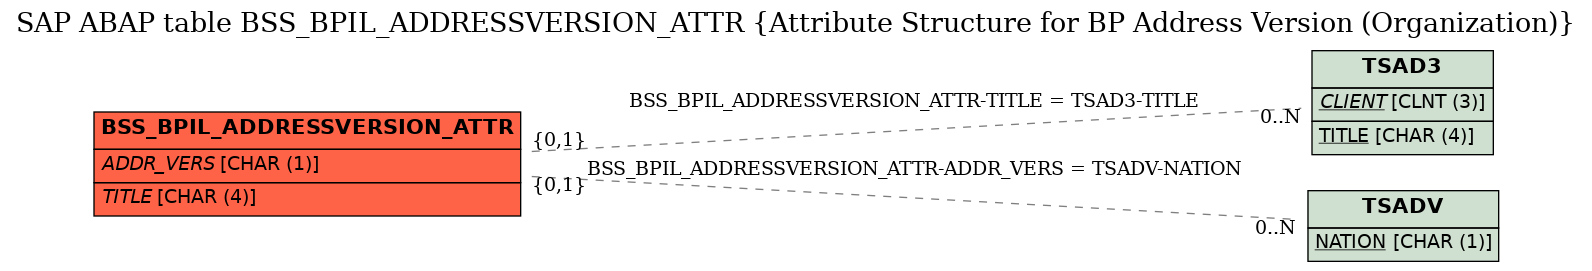 E-R Diagram for table BSS_BPIL_ADDRESSVERSION_ATTR (Attribute Structure for BP Address Version (Organization))